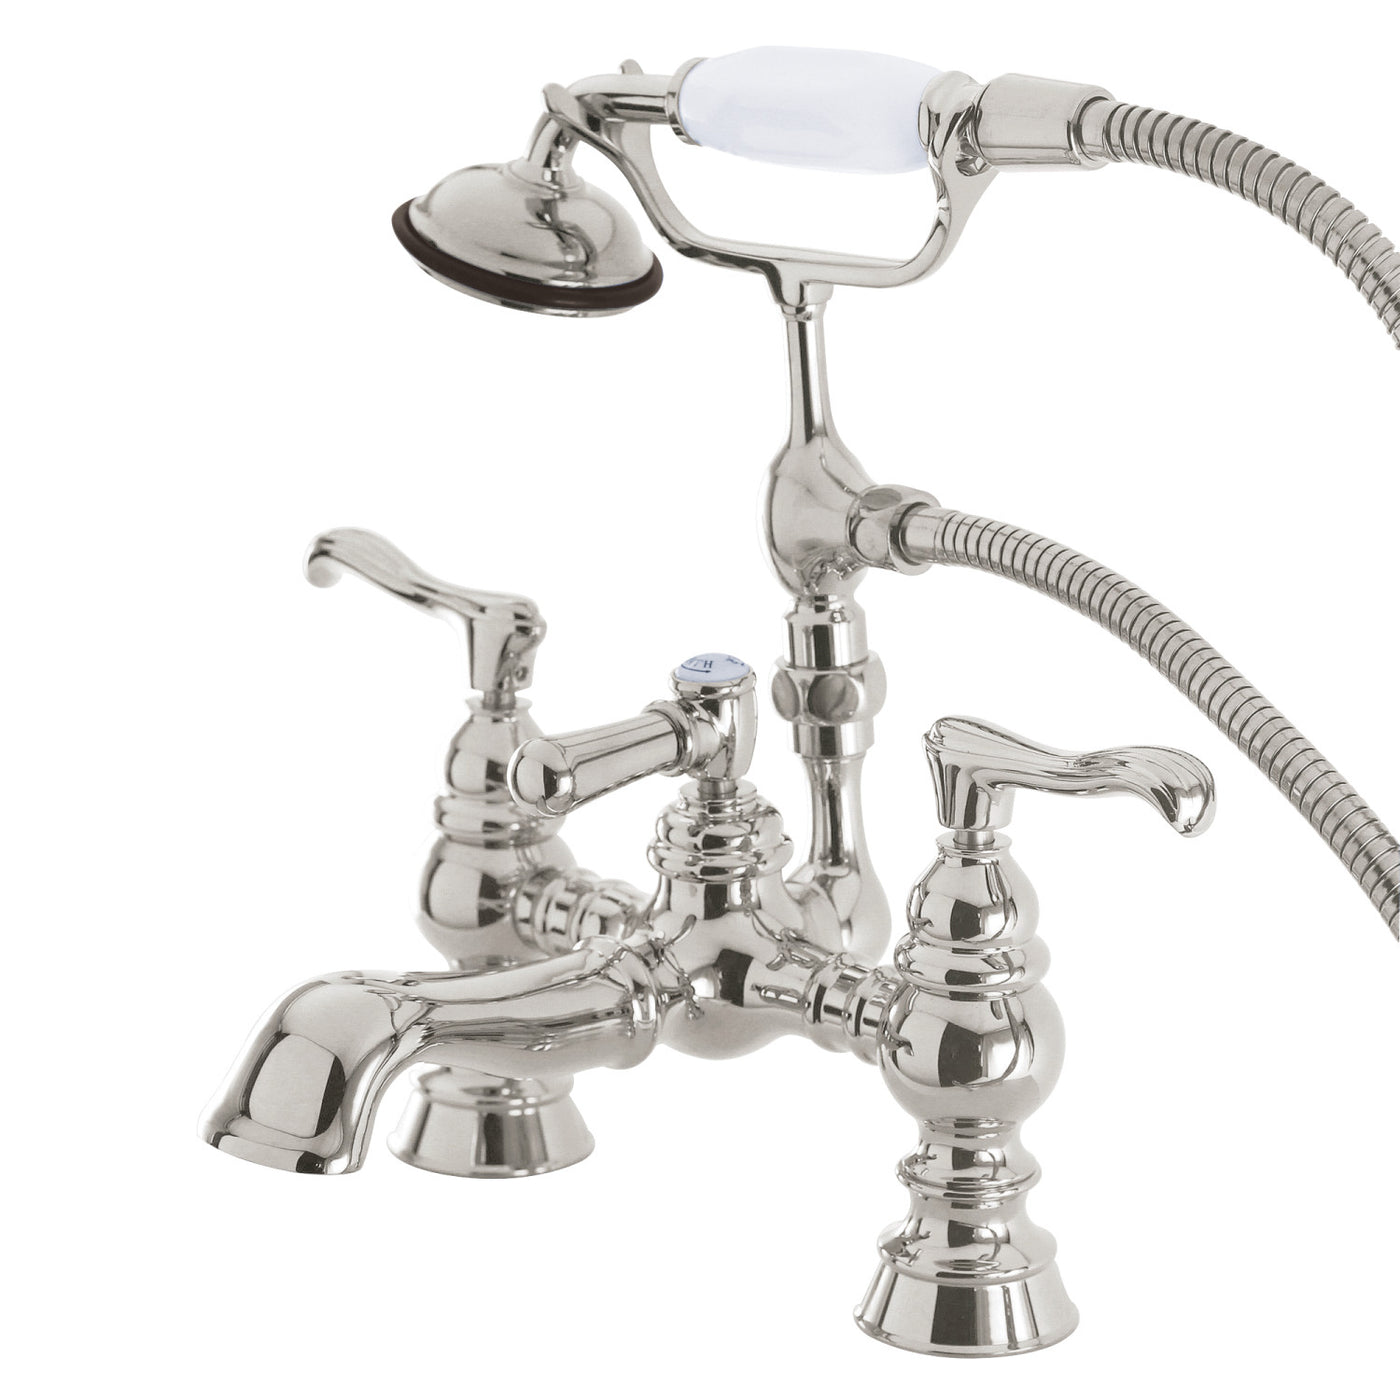 Elements of Design DT11528VL 7-Inch Deck Mount Tub Faucet with Hand Shower, Brushed Nickel